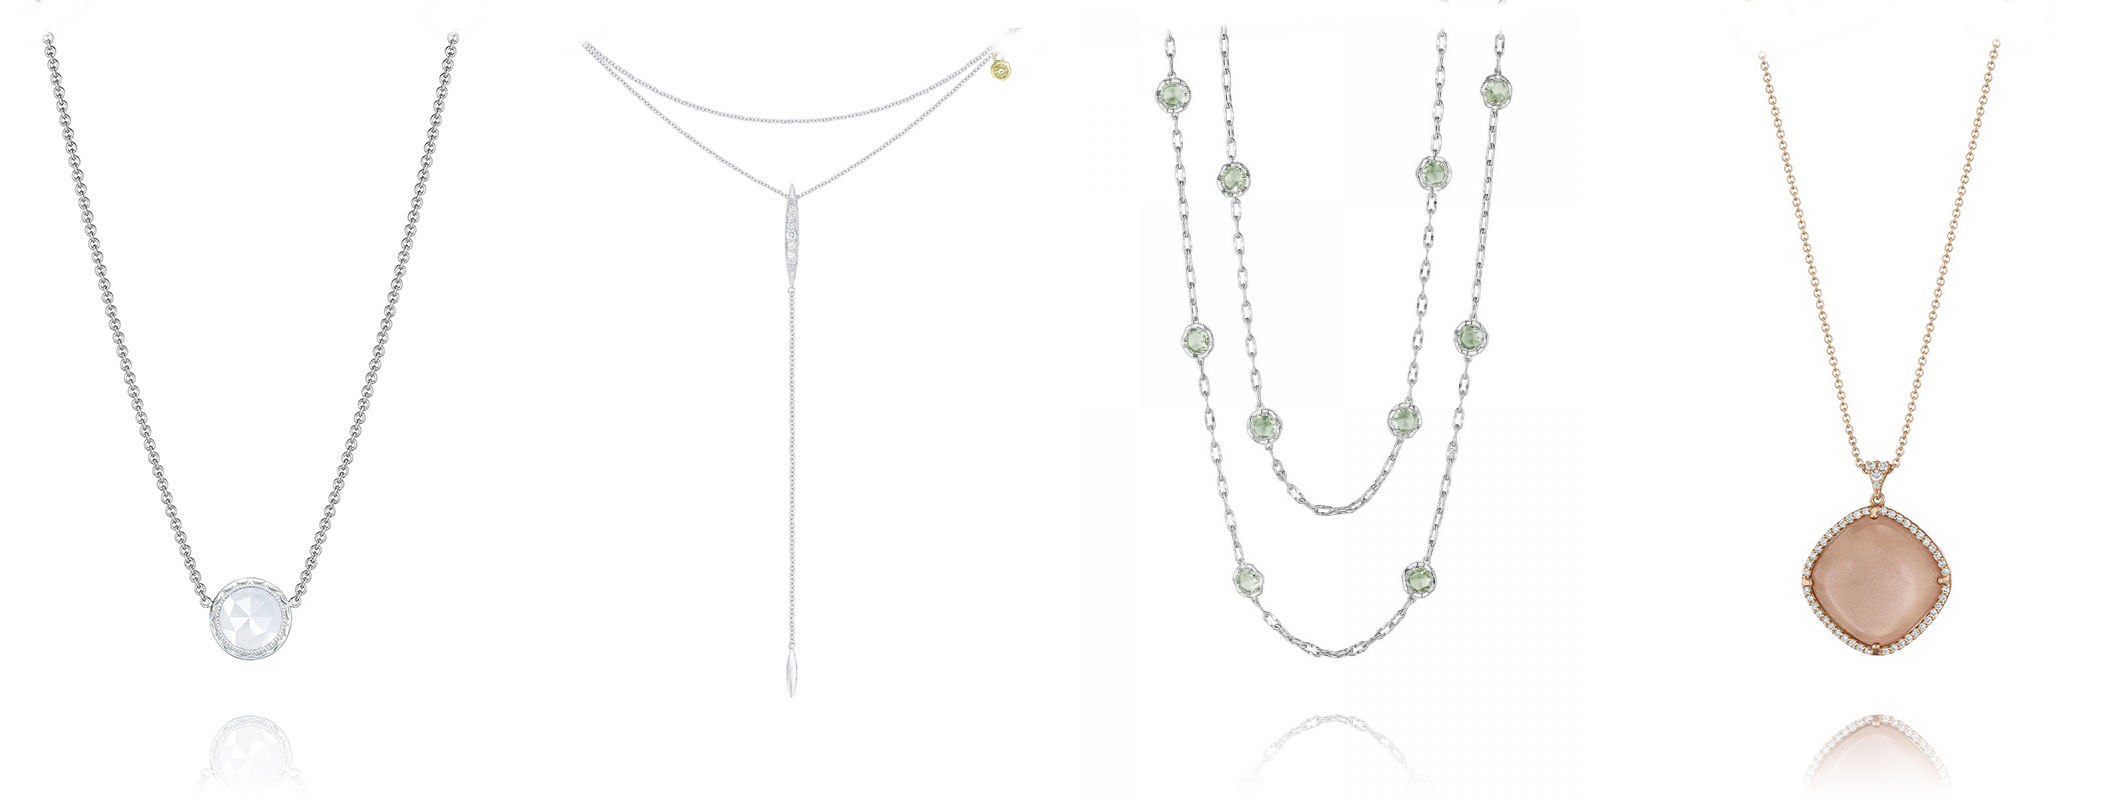 TACORI Necklaces at Barons Jewelers